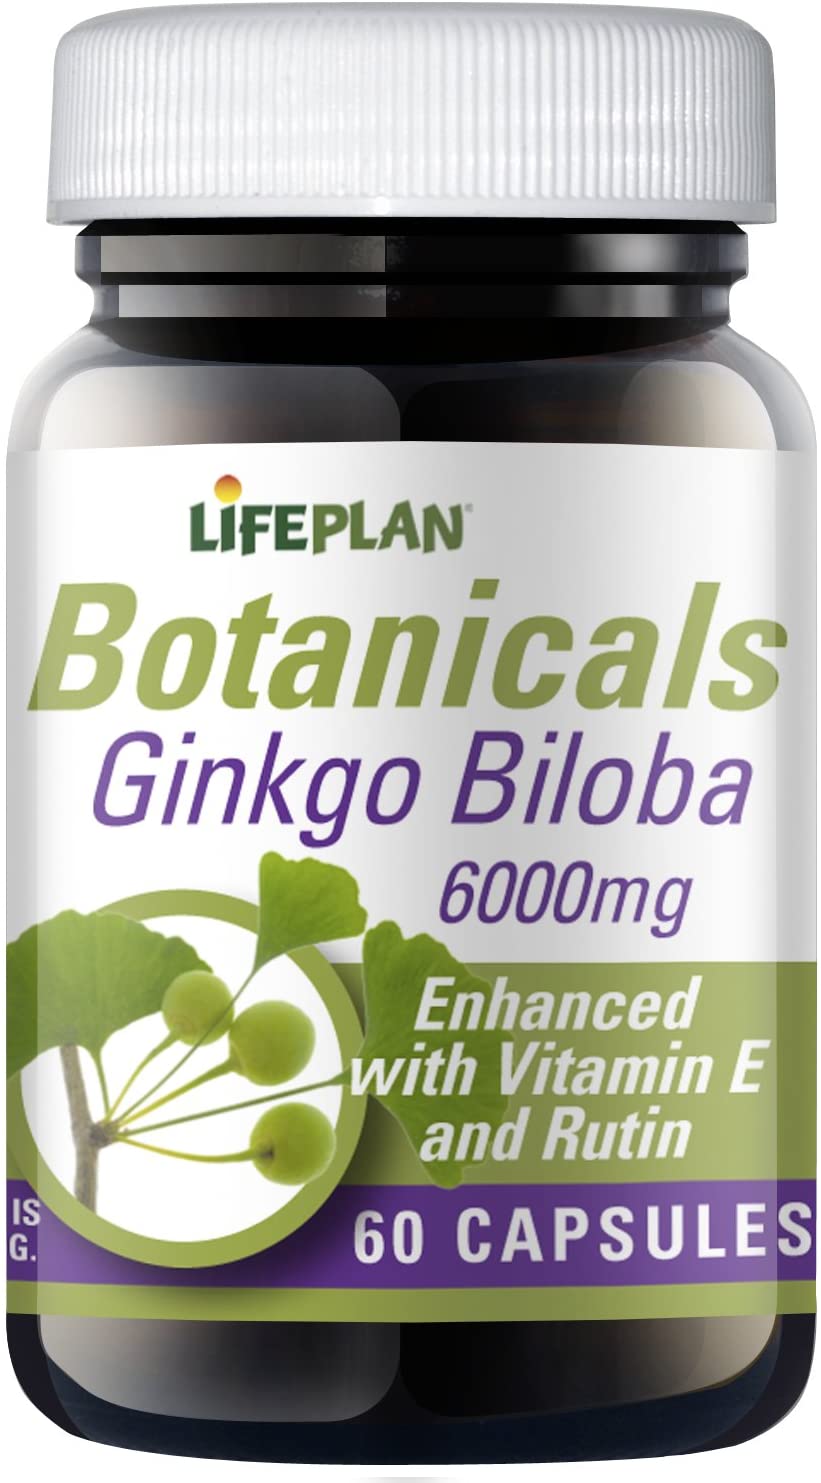 Lifeplan Botanicals Ginkgo Biloba 6000mg 60 Caps